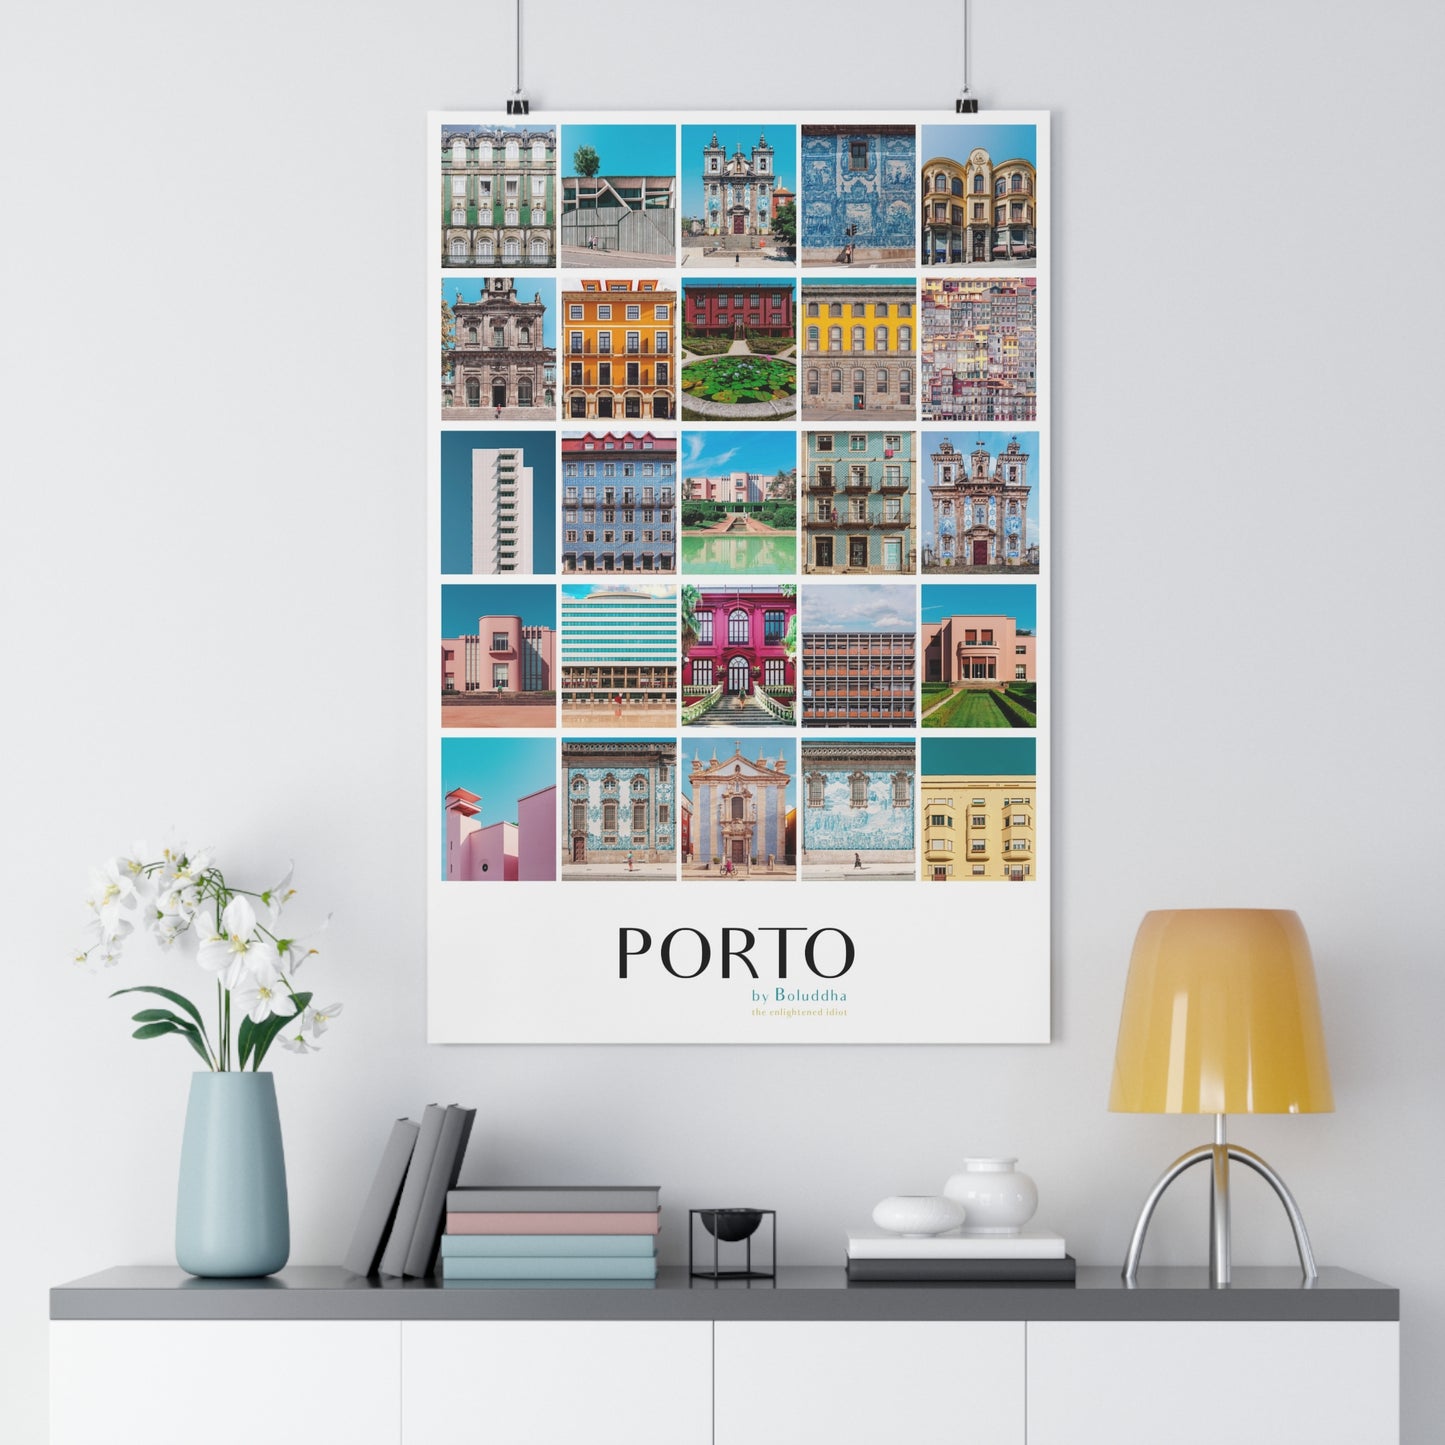 Porto by Boluddha